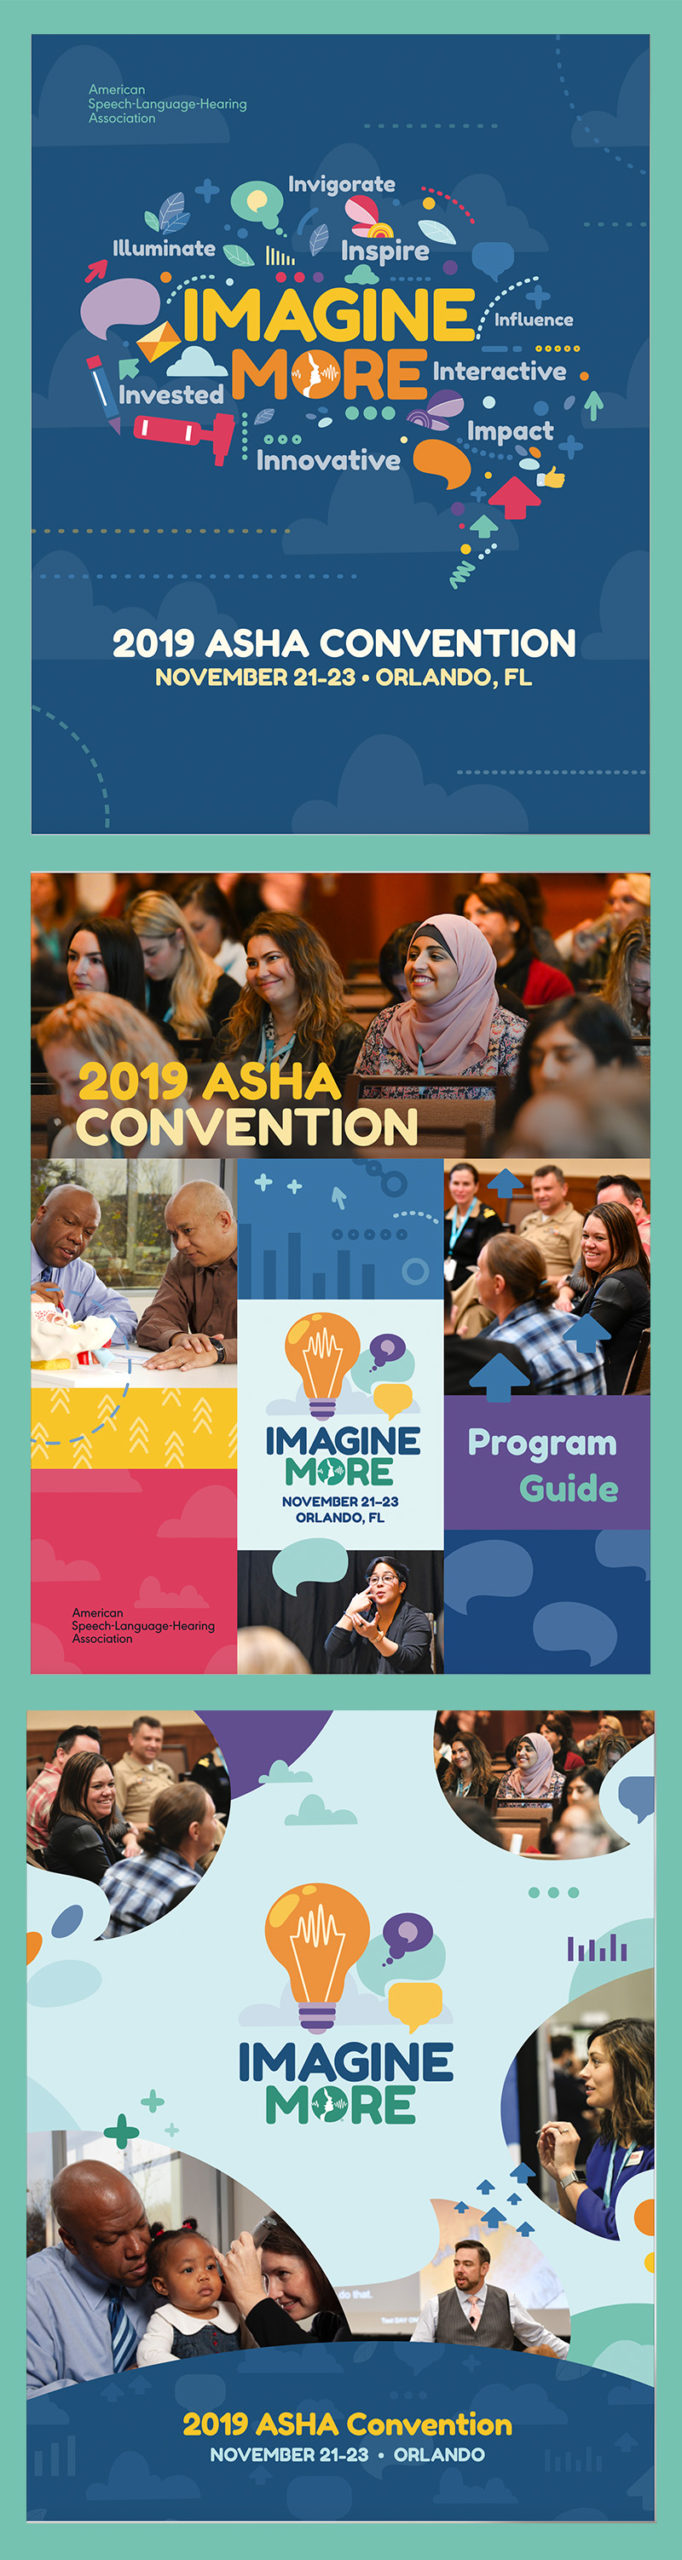 ASHA 2019 Convention Program Guide Cover Designs